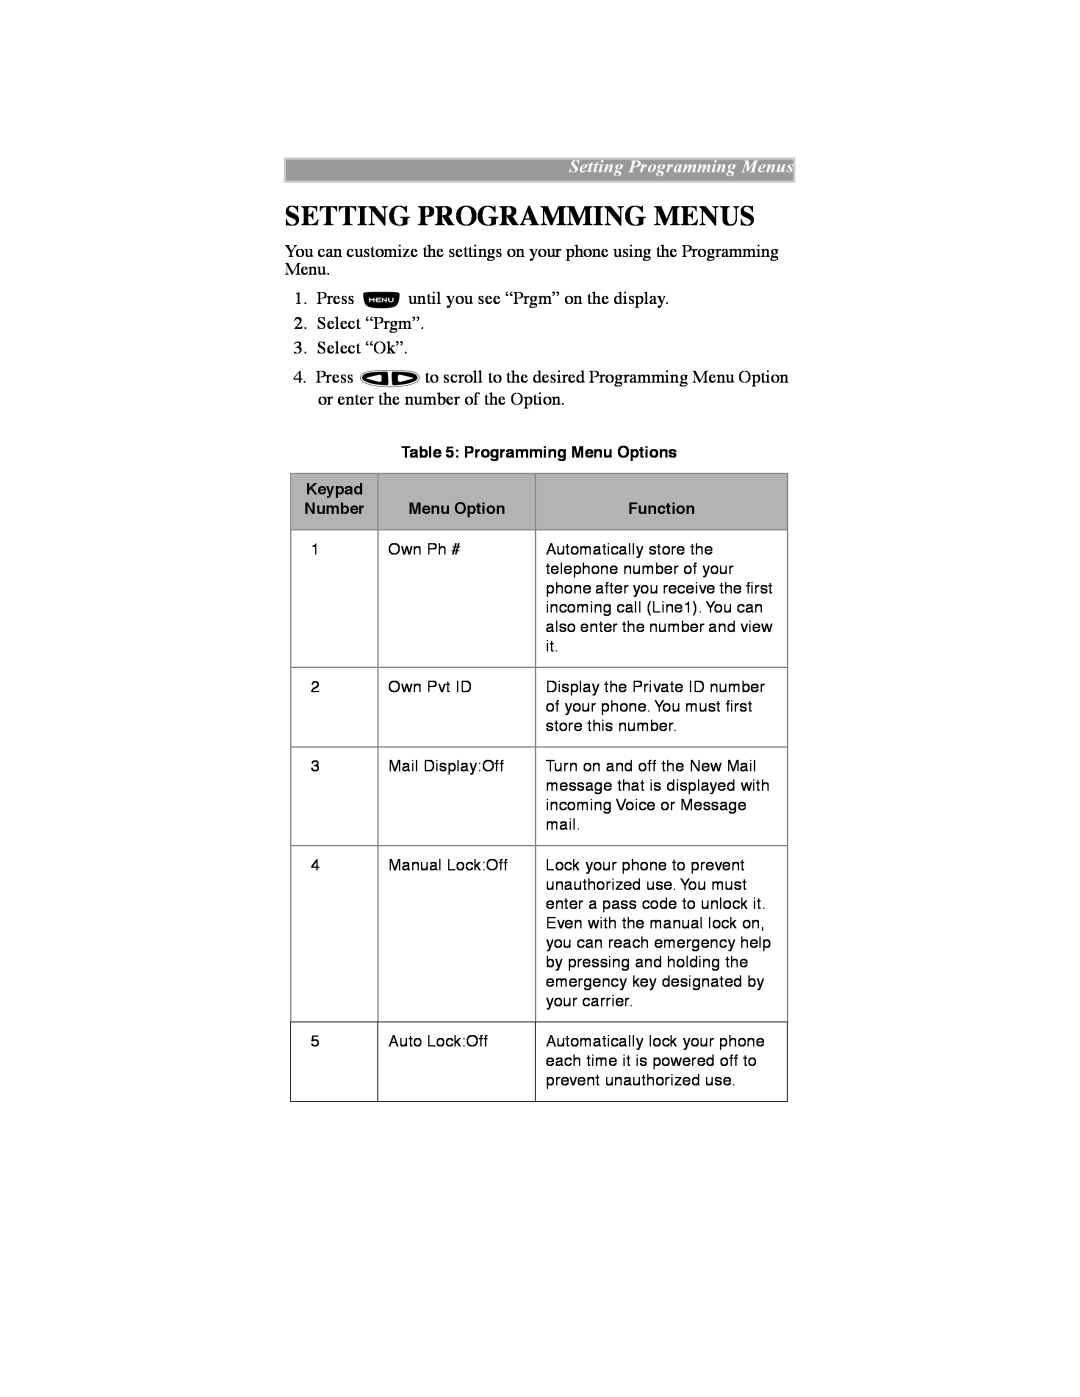 Motorola iDEN manual Setting Programming Menus, Programming Menu Options 